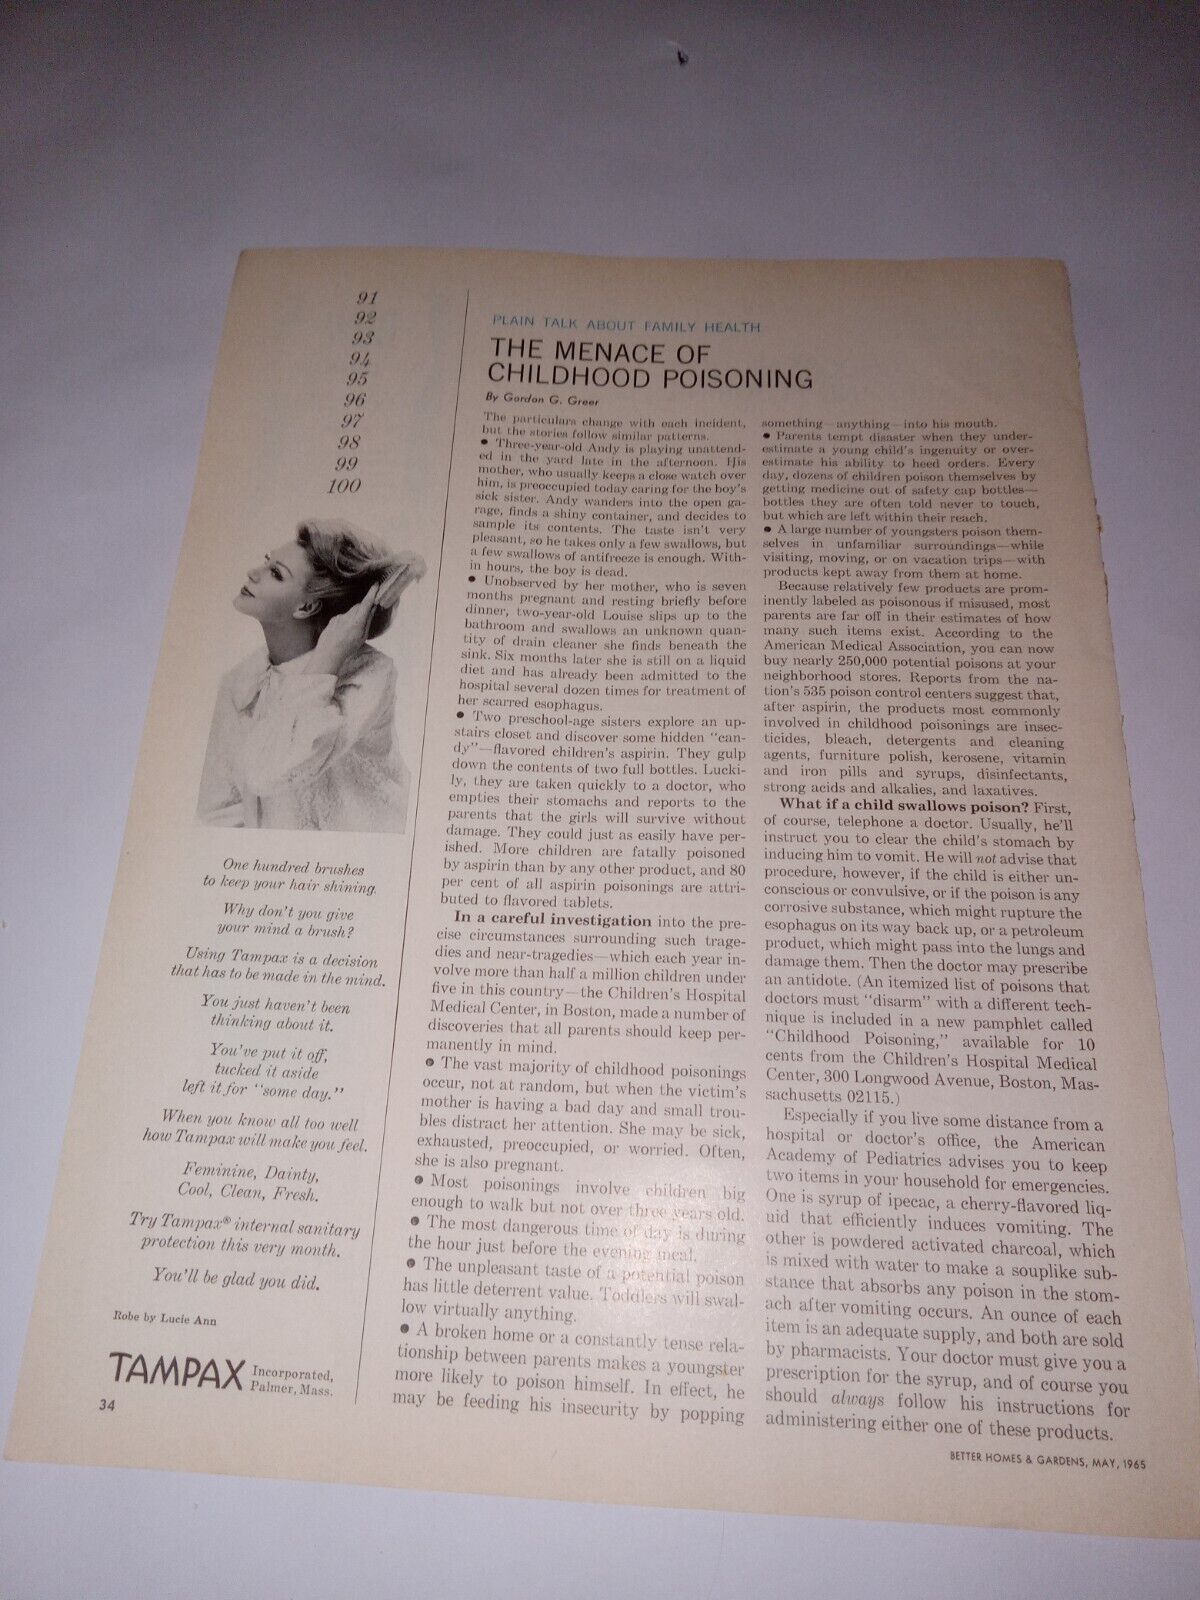 Tampax Print Advertisement 1965 Bowlene Ad